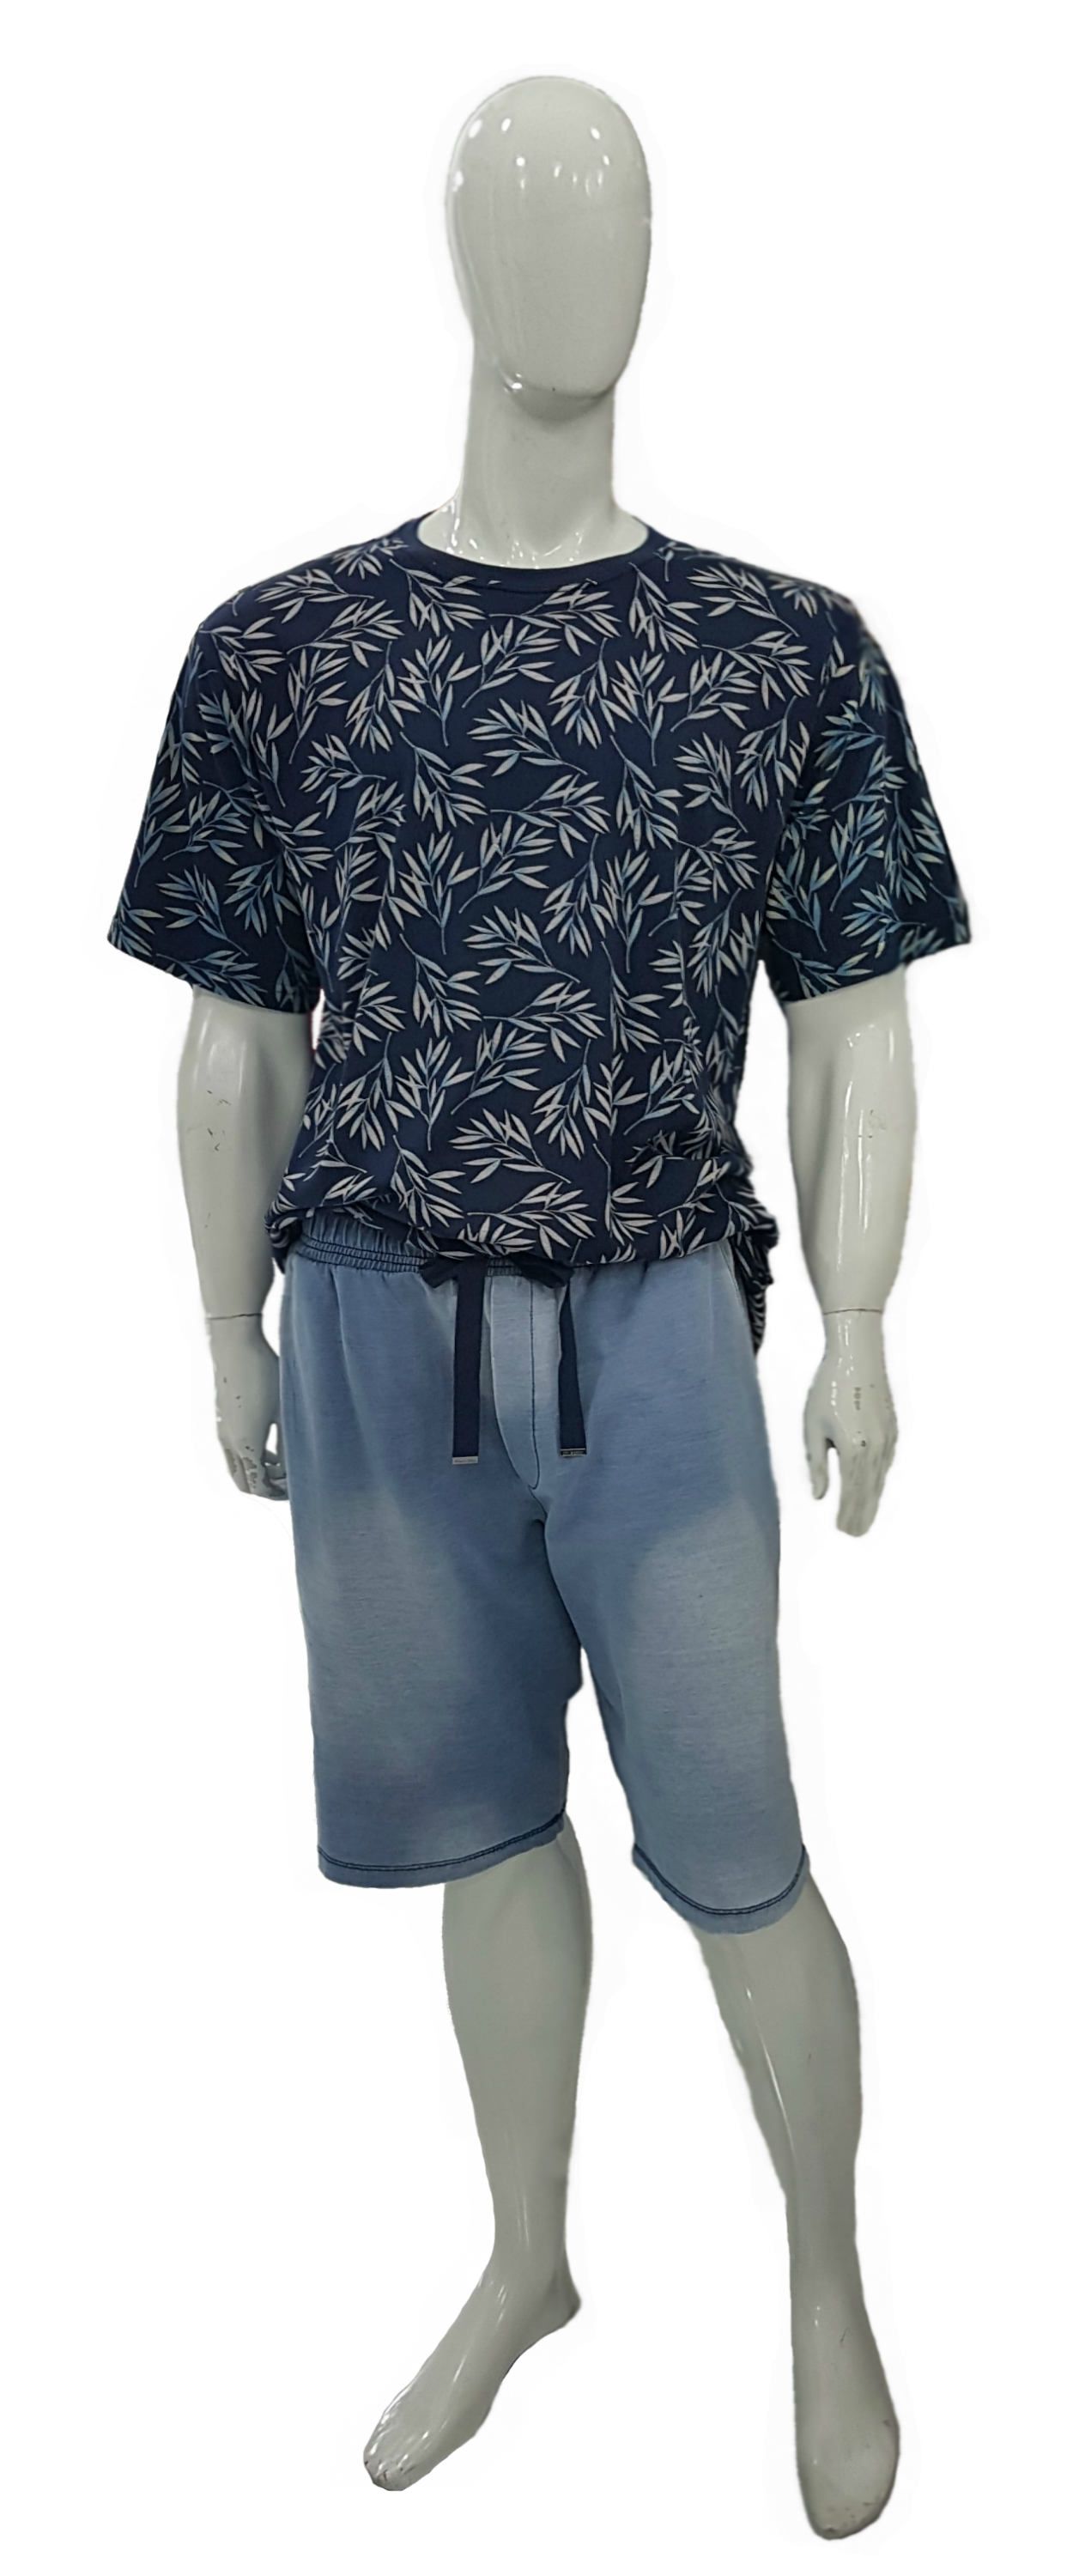 Camiseta Plus Size Floral Ref 02889 / Bermuda Plus Size MoleJeans Ref 02895